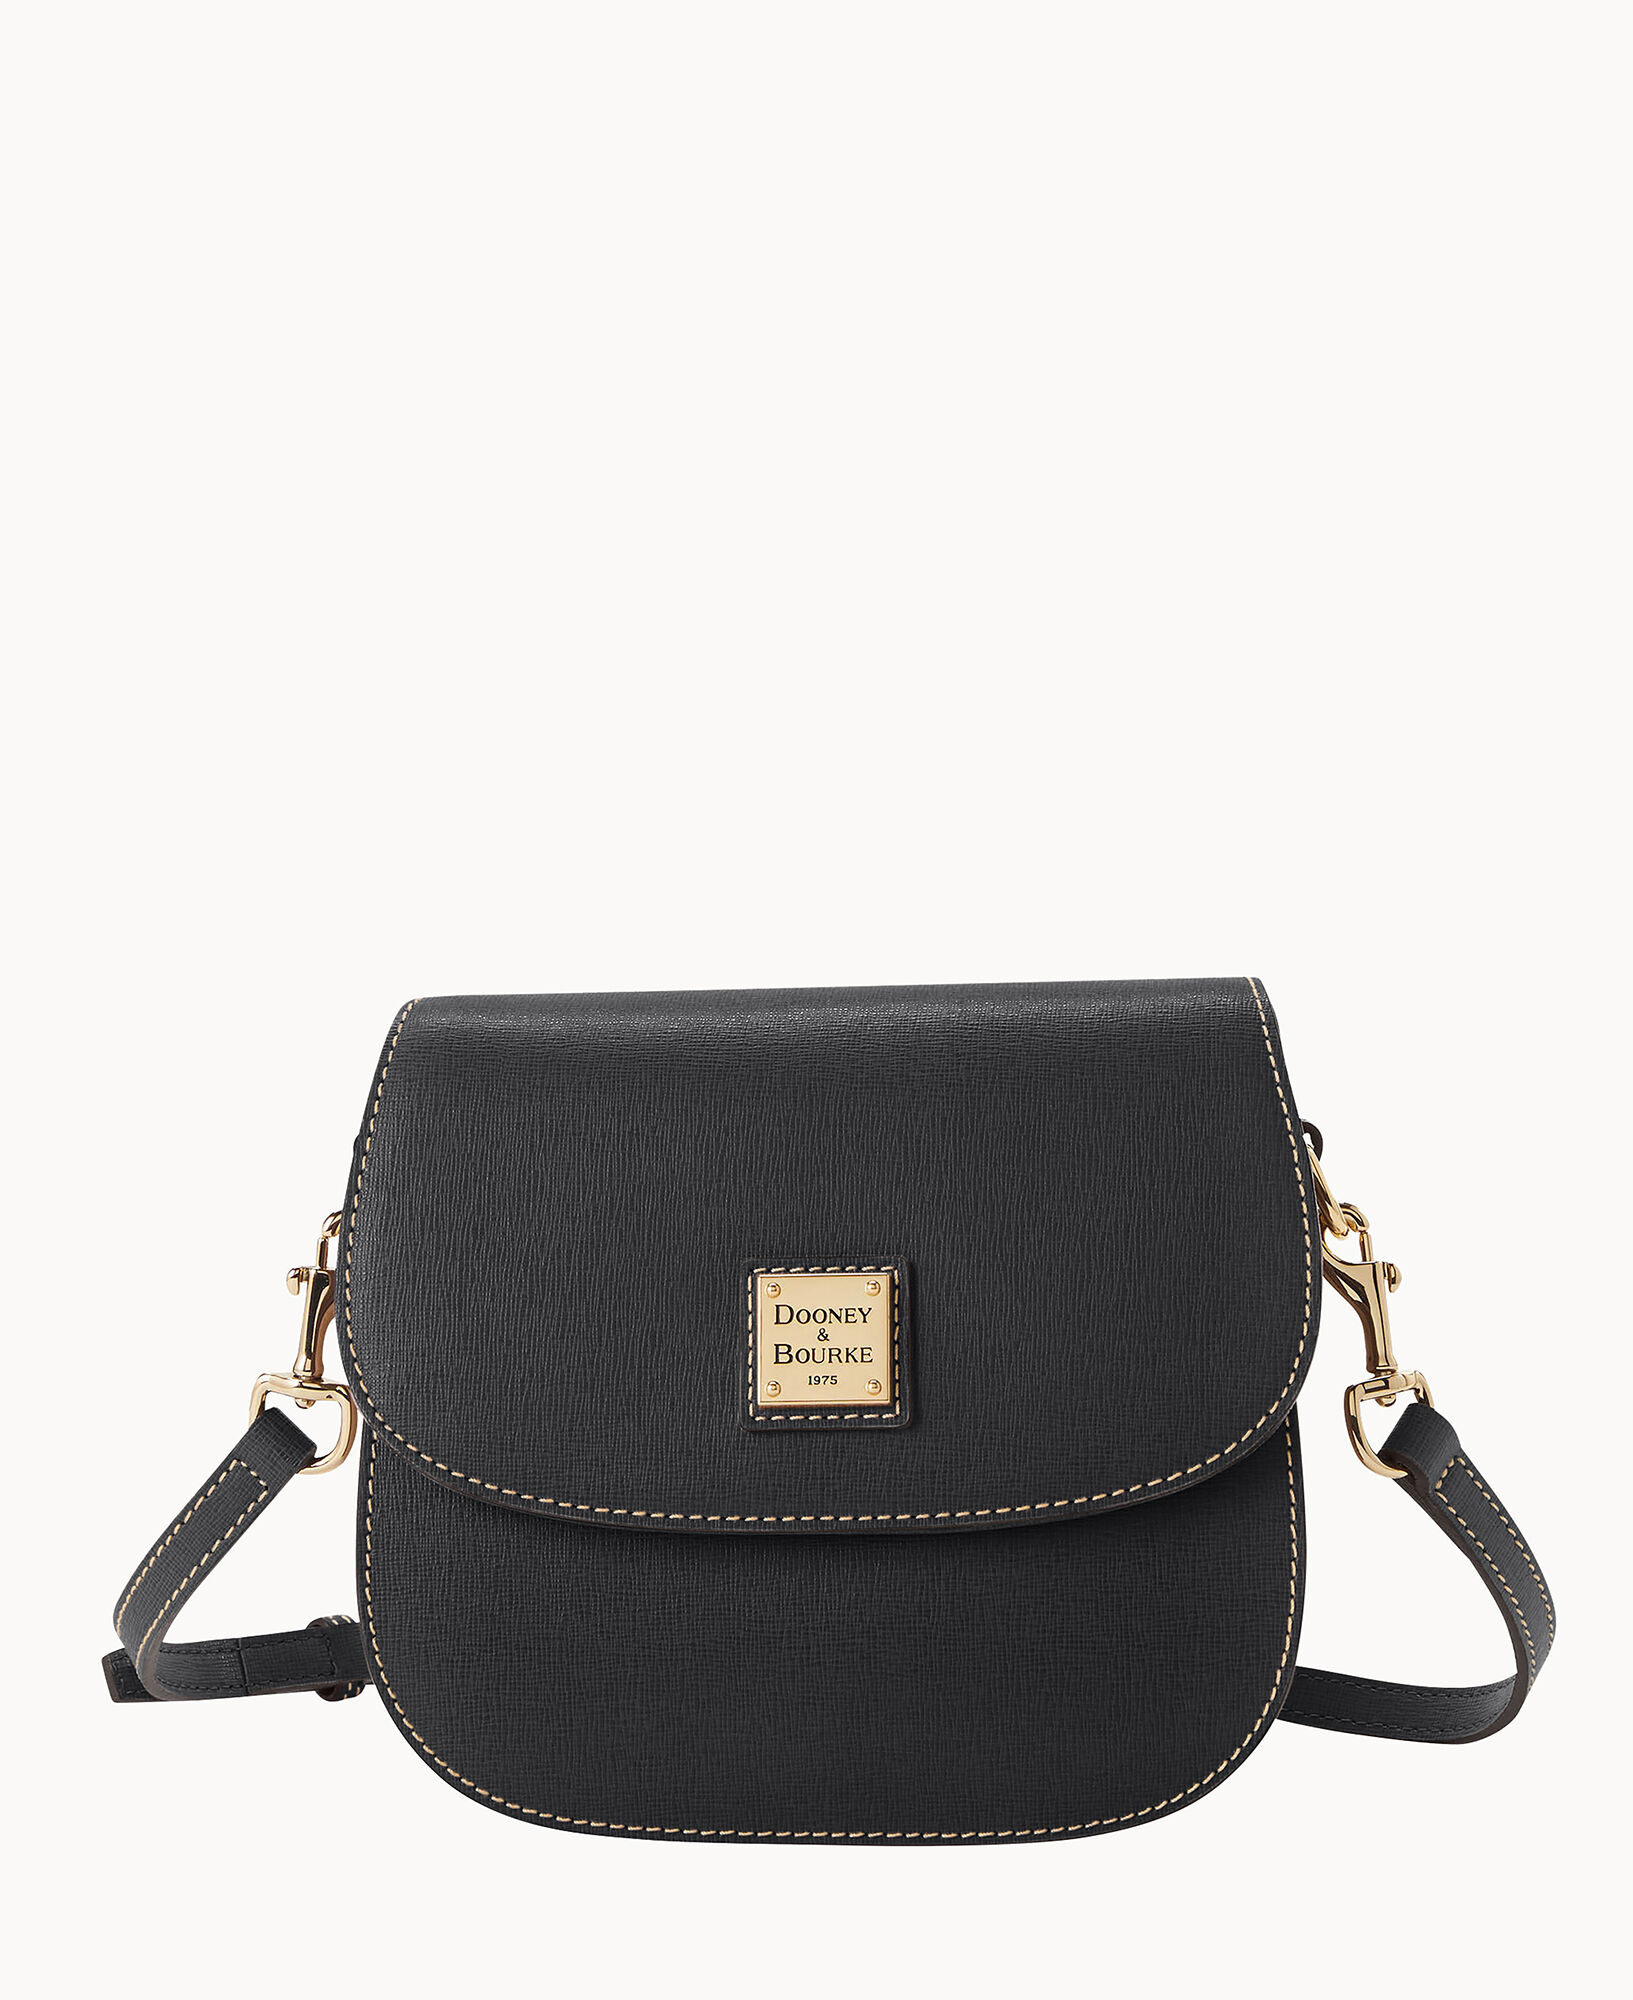 DOONEY & BOURKE LEXI Black Saffiano Leather Small Adjustable Crossbody Bag